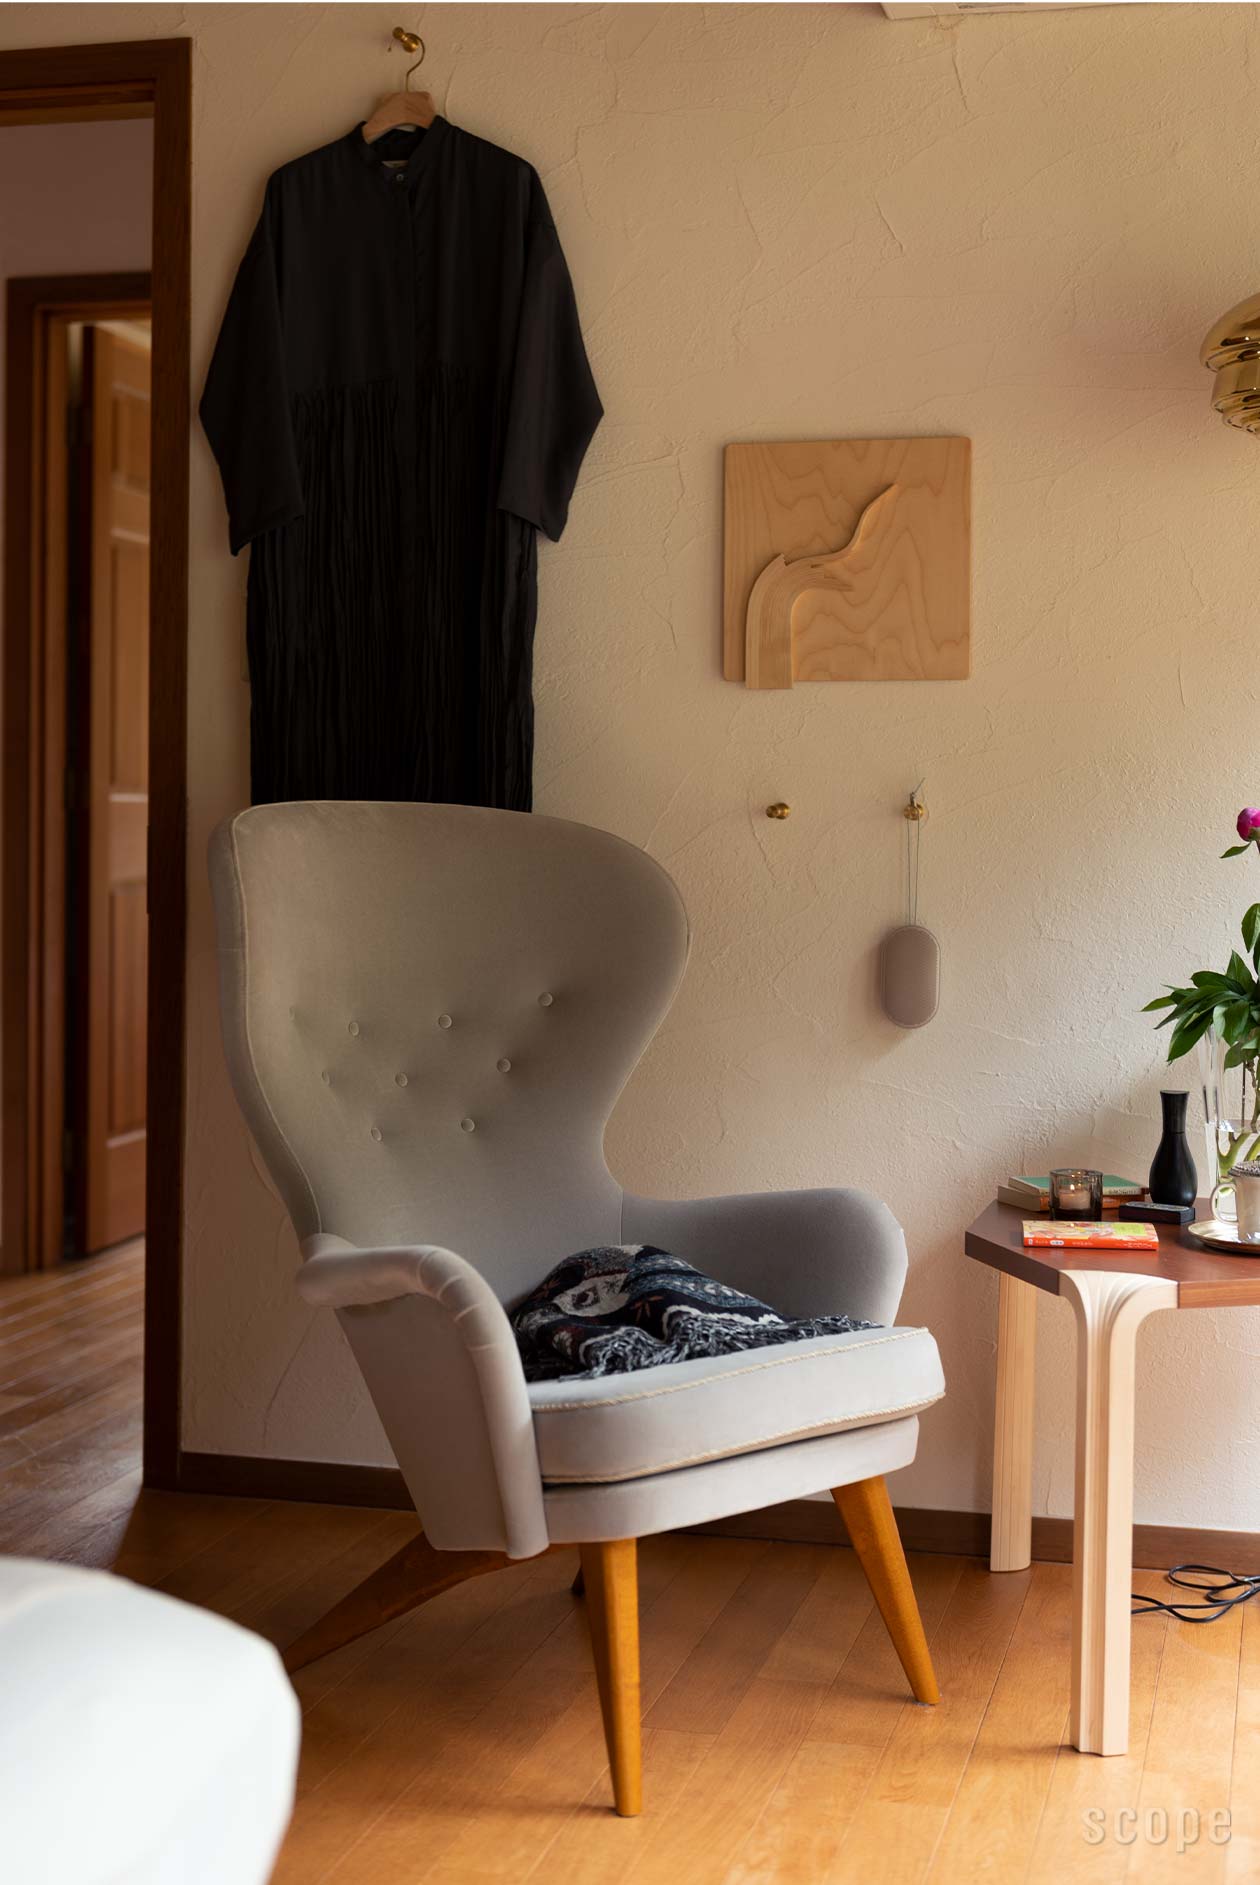 Fasetti | Siesta Lounge Chair | Fasetti (ファセッティ)